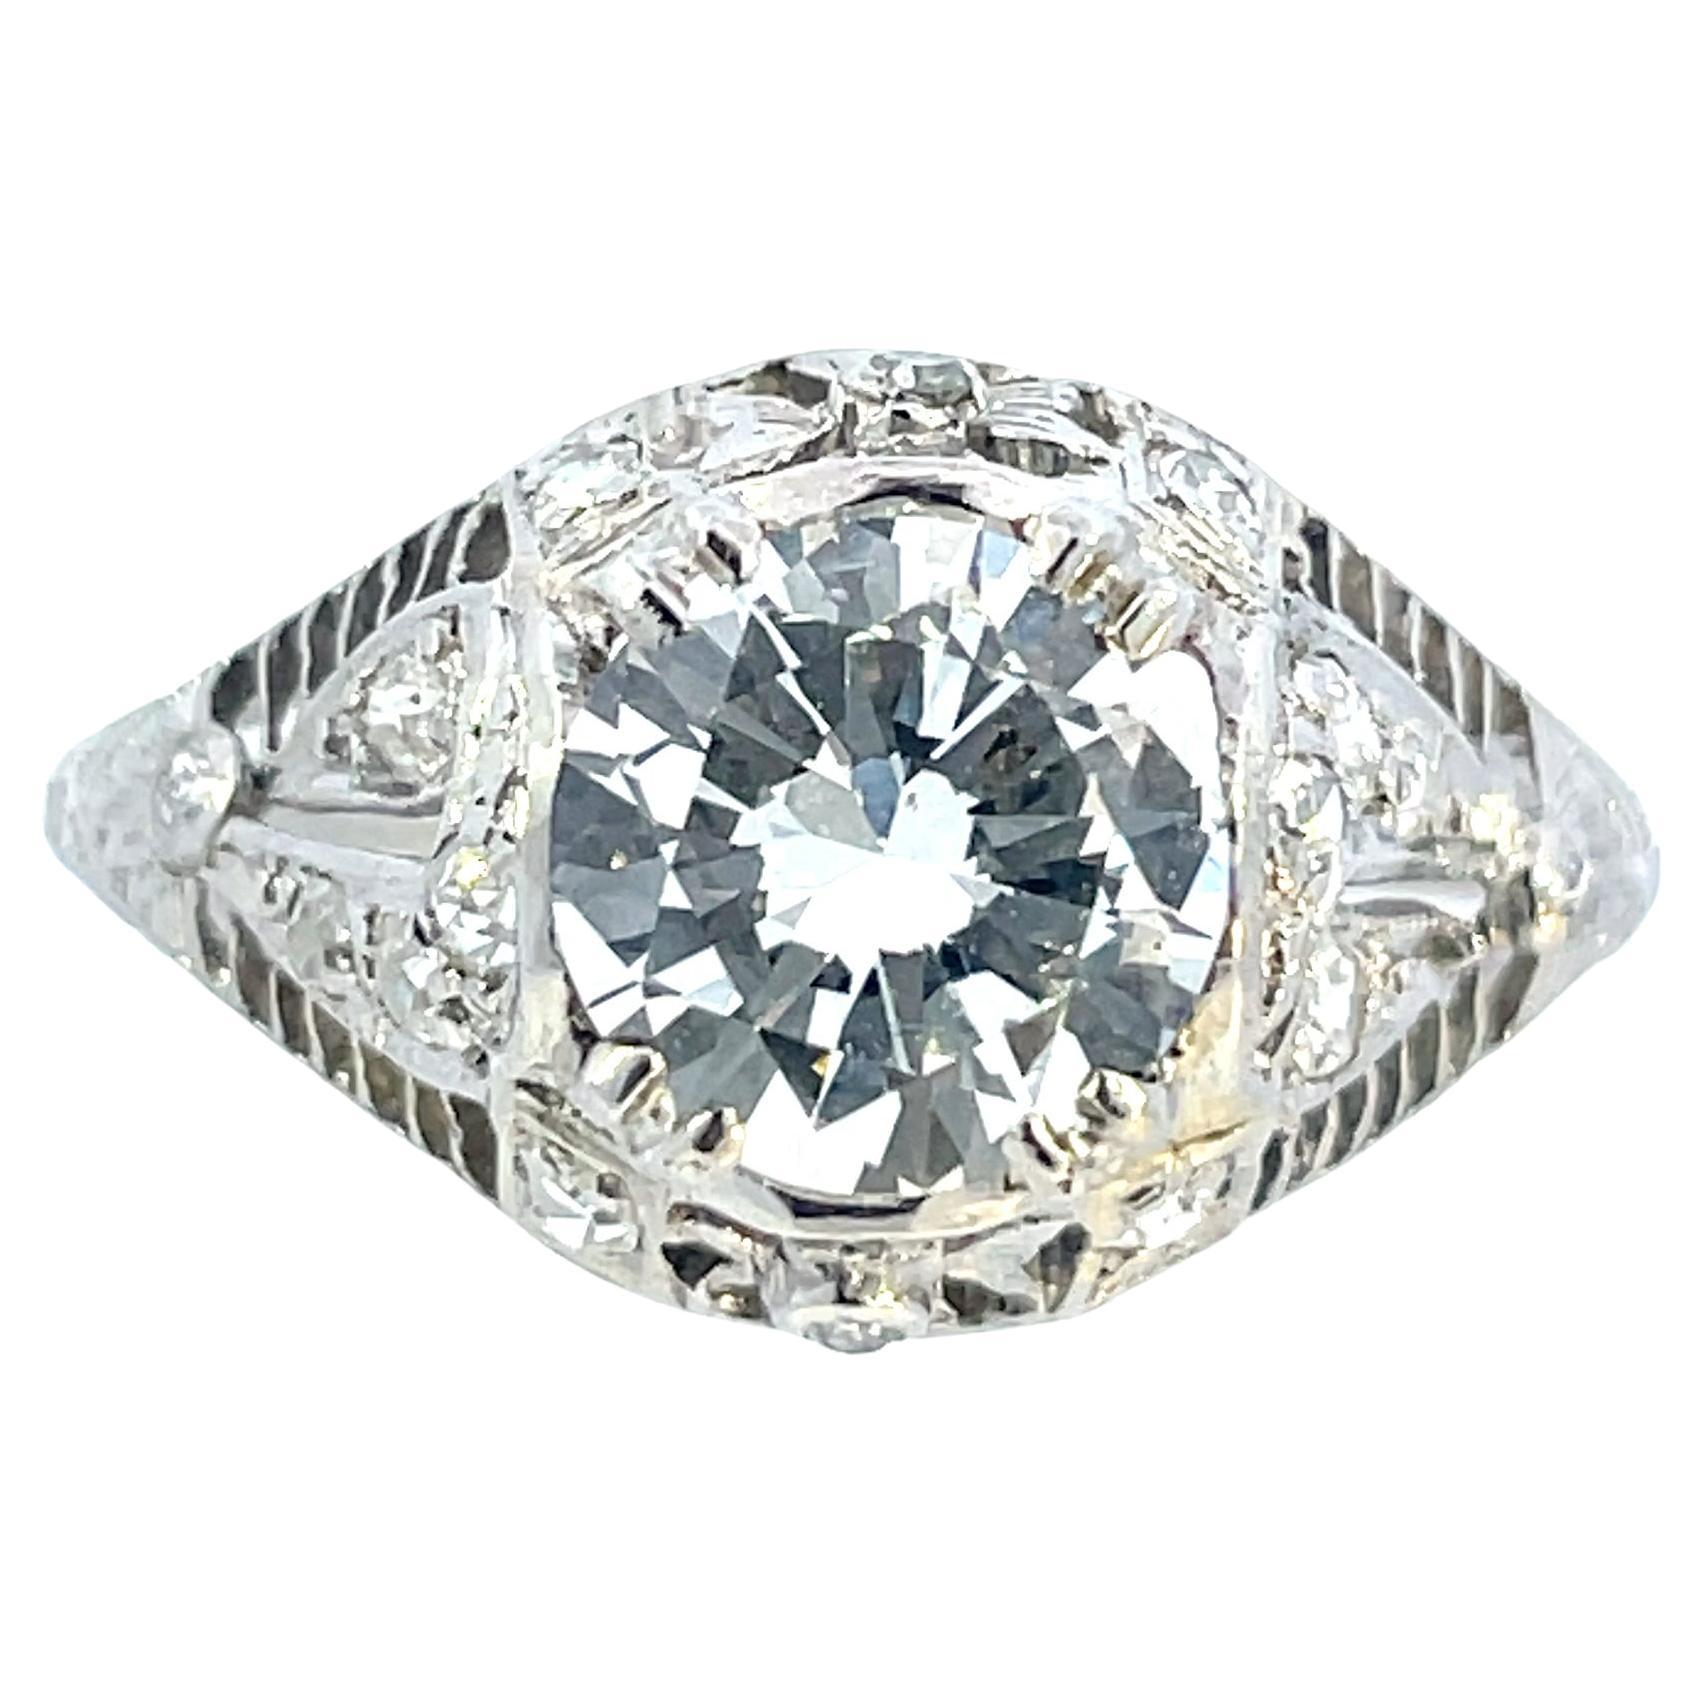 1910 Edwardian Platinum Filigree Ring with Round and European Cut Diamonds 